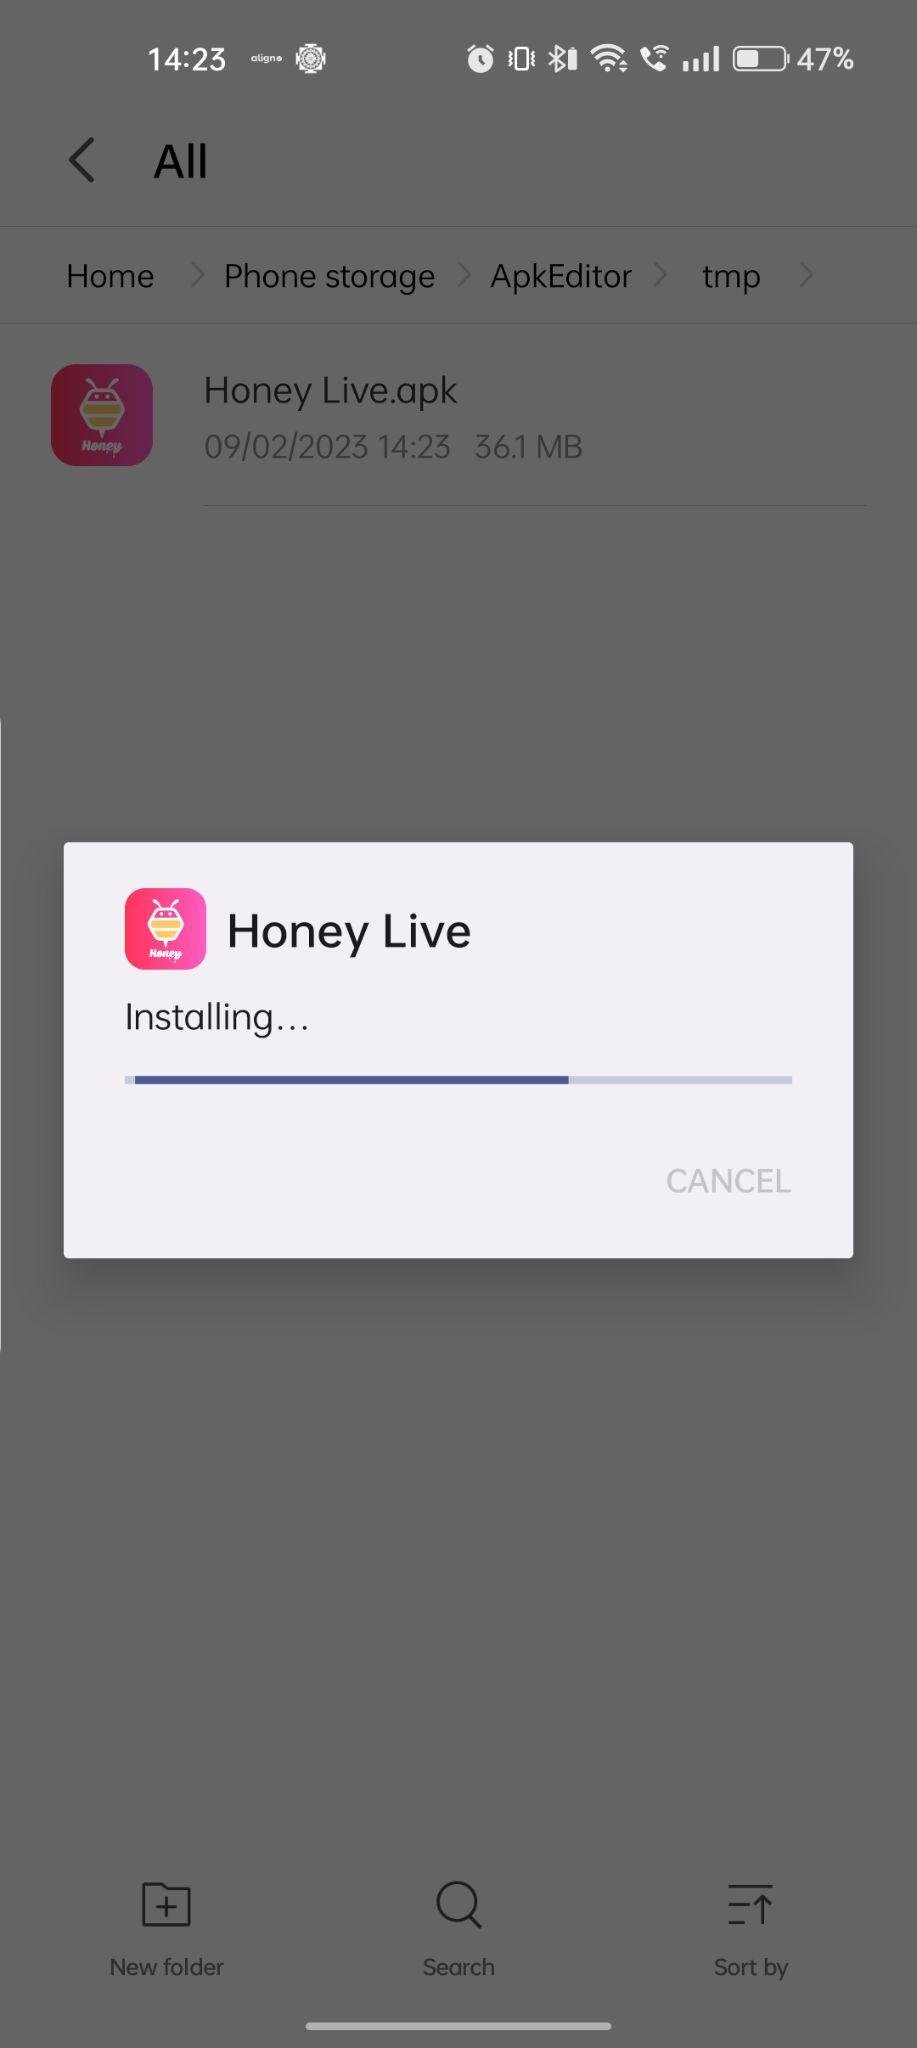 Honeylive apk installing 